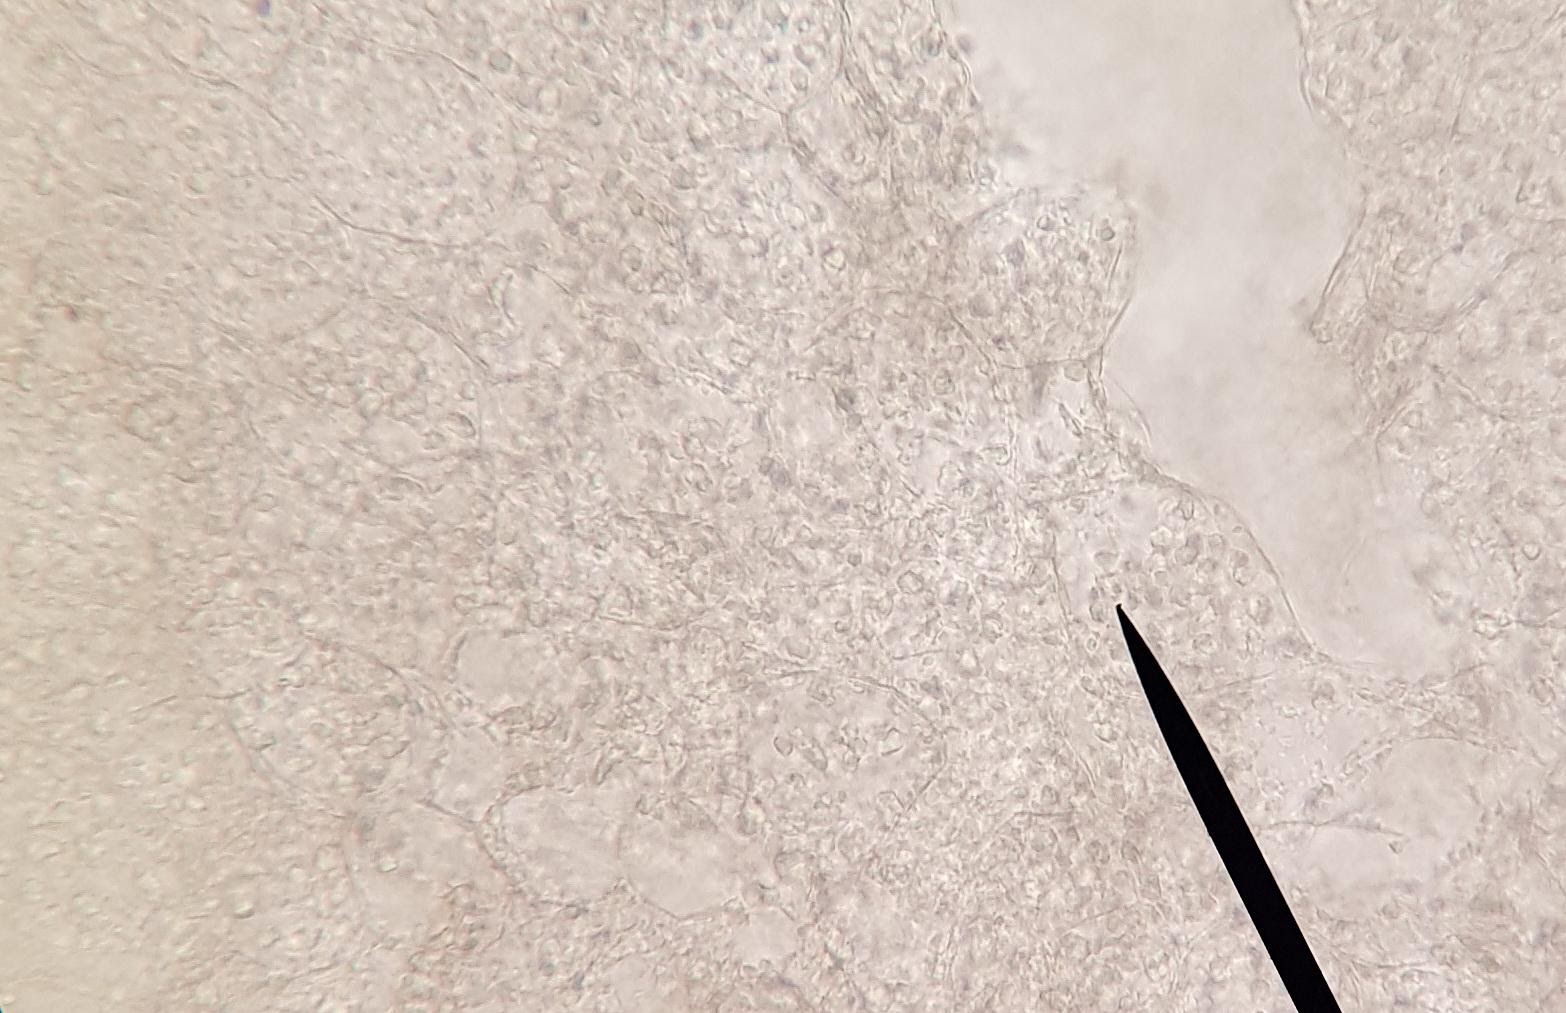 <b>Coupe de cerneau de noix observé au microscope optique x100</b><div><i>©RS.2020</i><b><br></b></div>